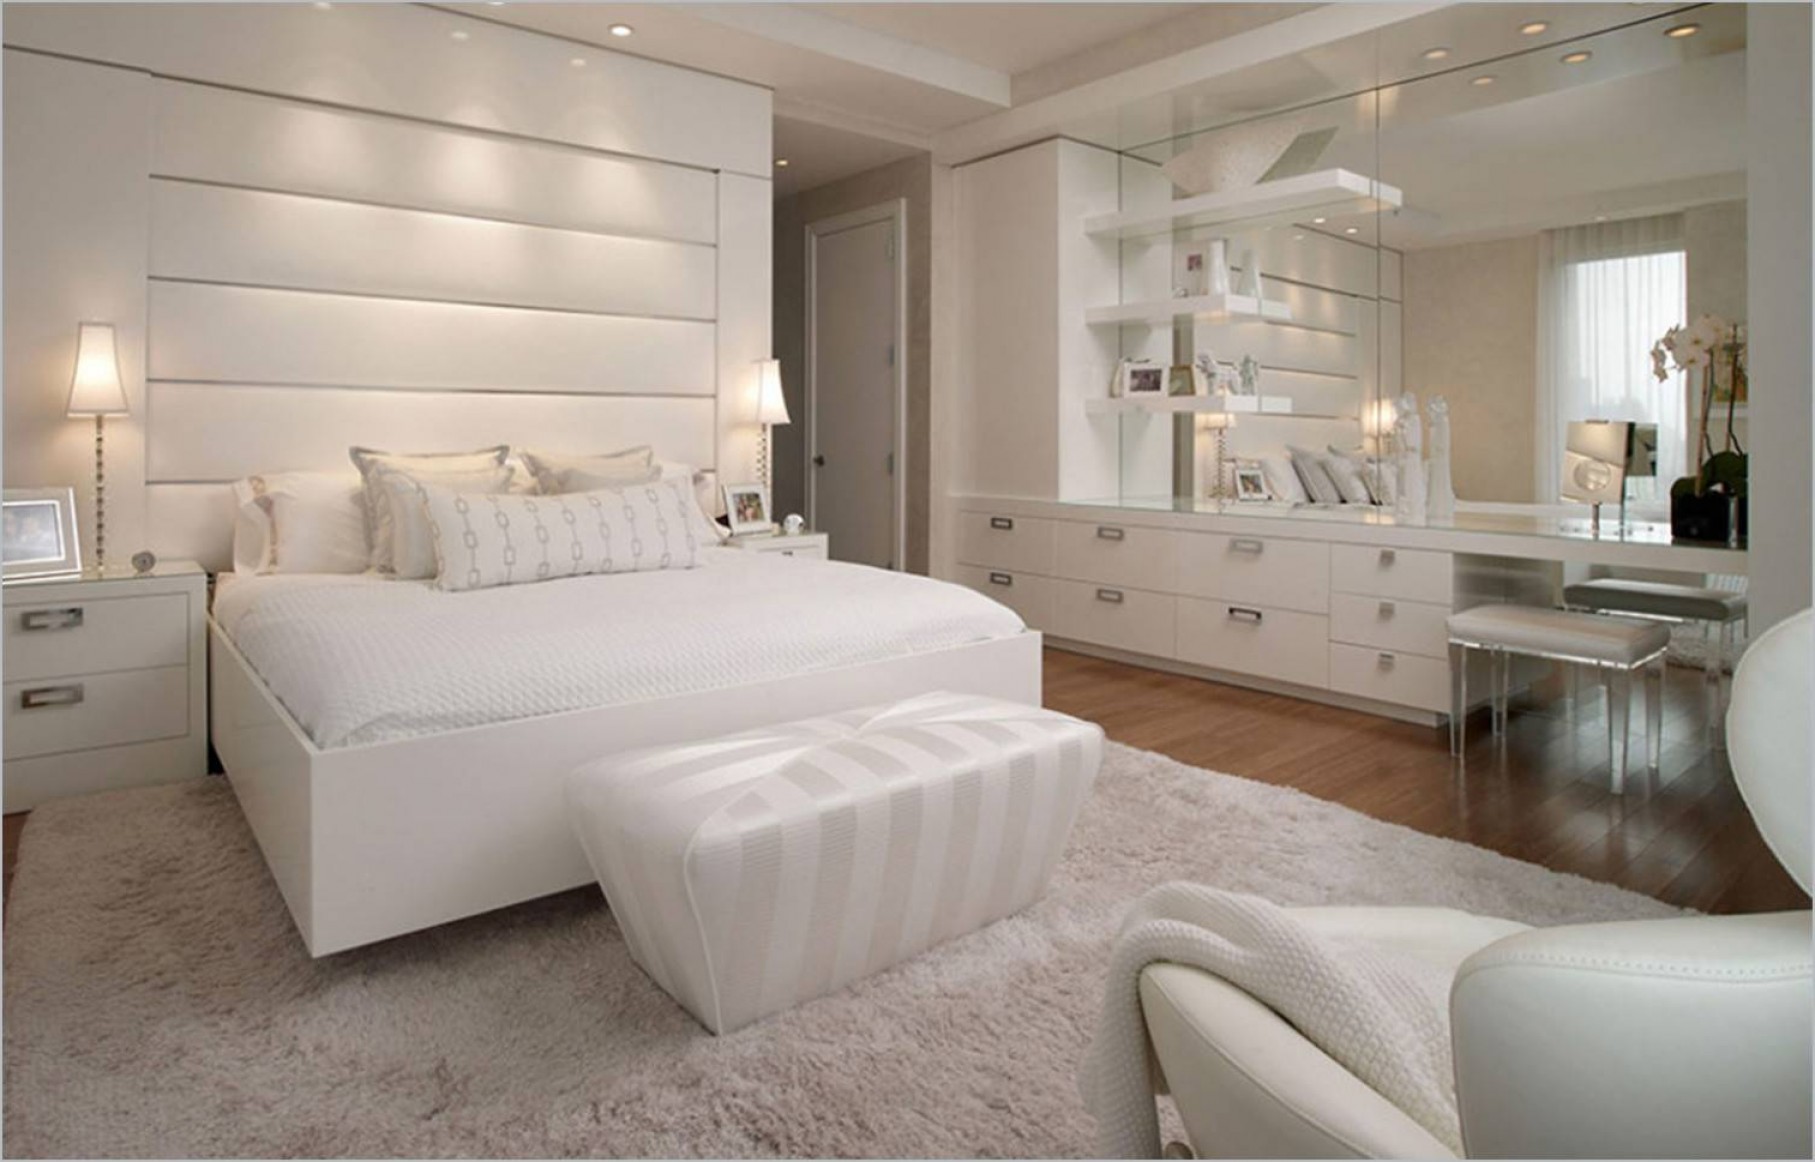 ergonomic living room furniture cozy bedroom interior design ideas - 4 Easy Tips To Make Your Bedroom Feel Cozy